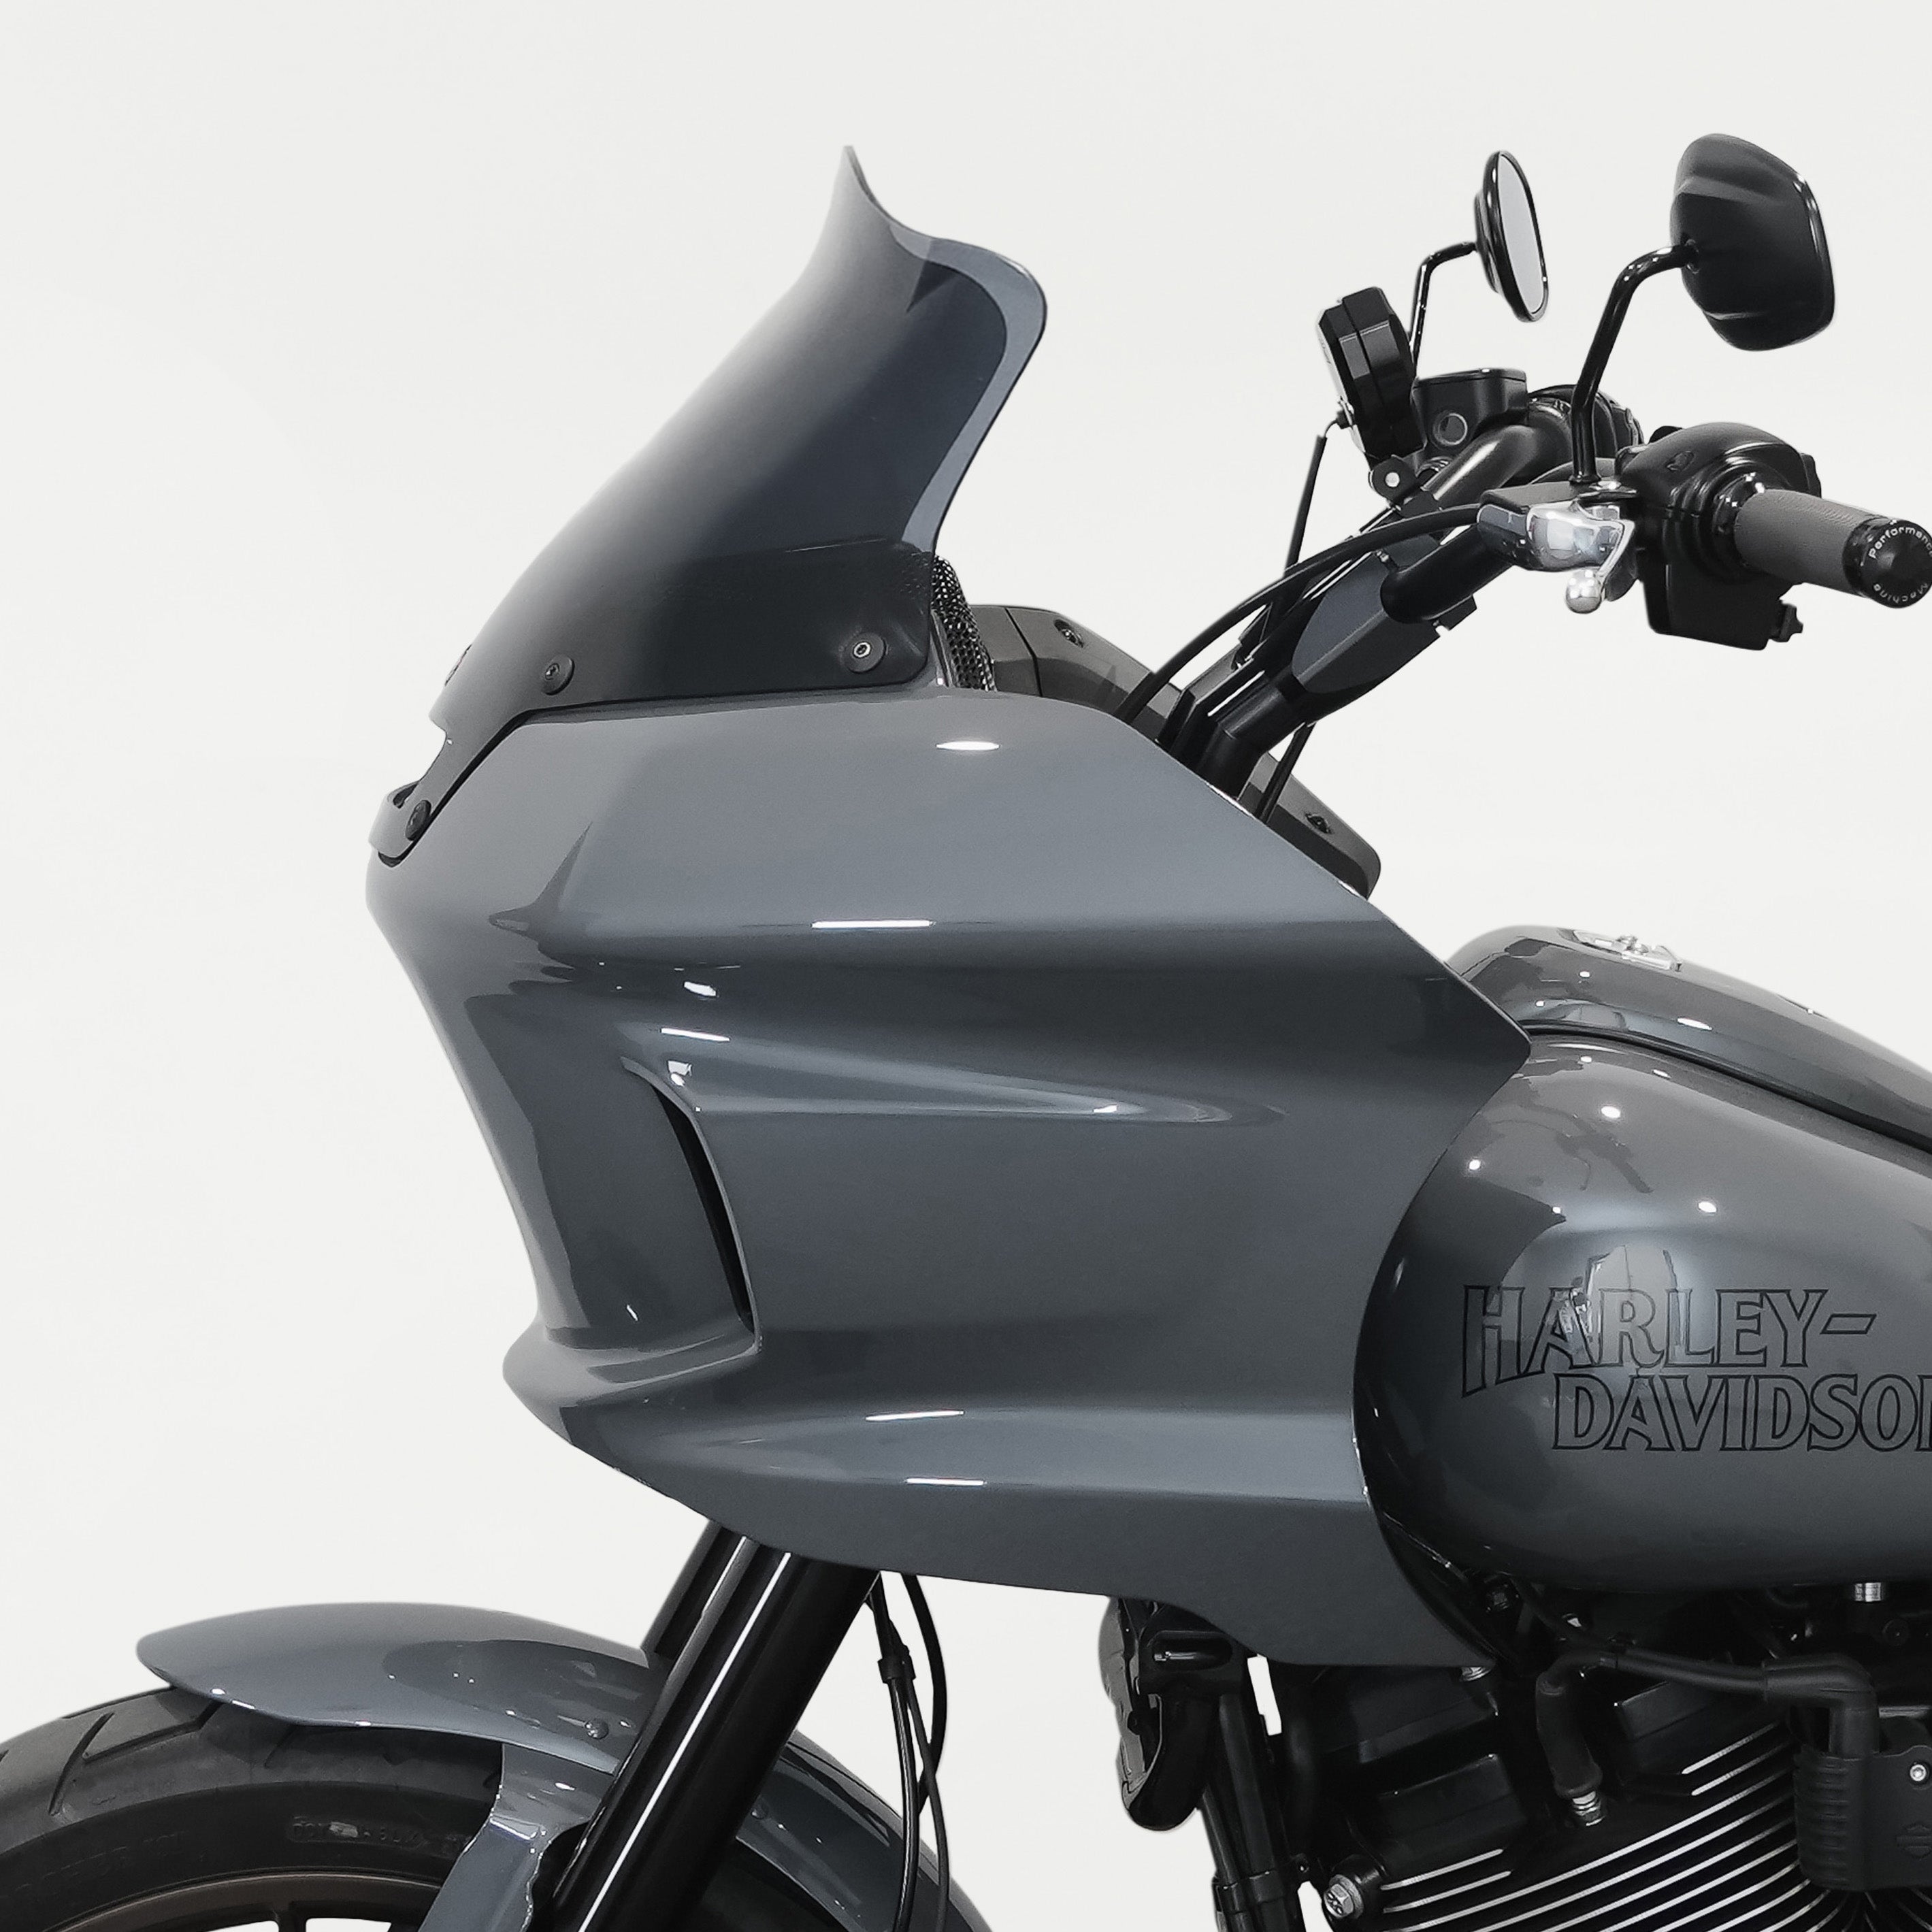 8" Dark Smoke Flare™ Windshield for Harley-Davidson Low Rider ST motorcycle models(8" Dark Smoke)